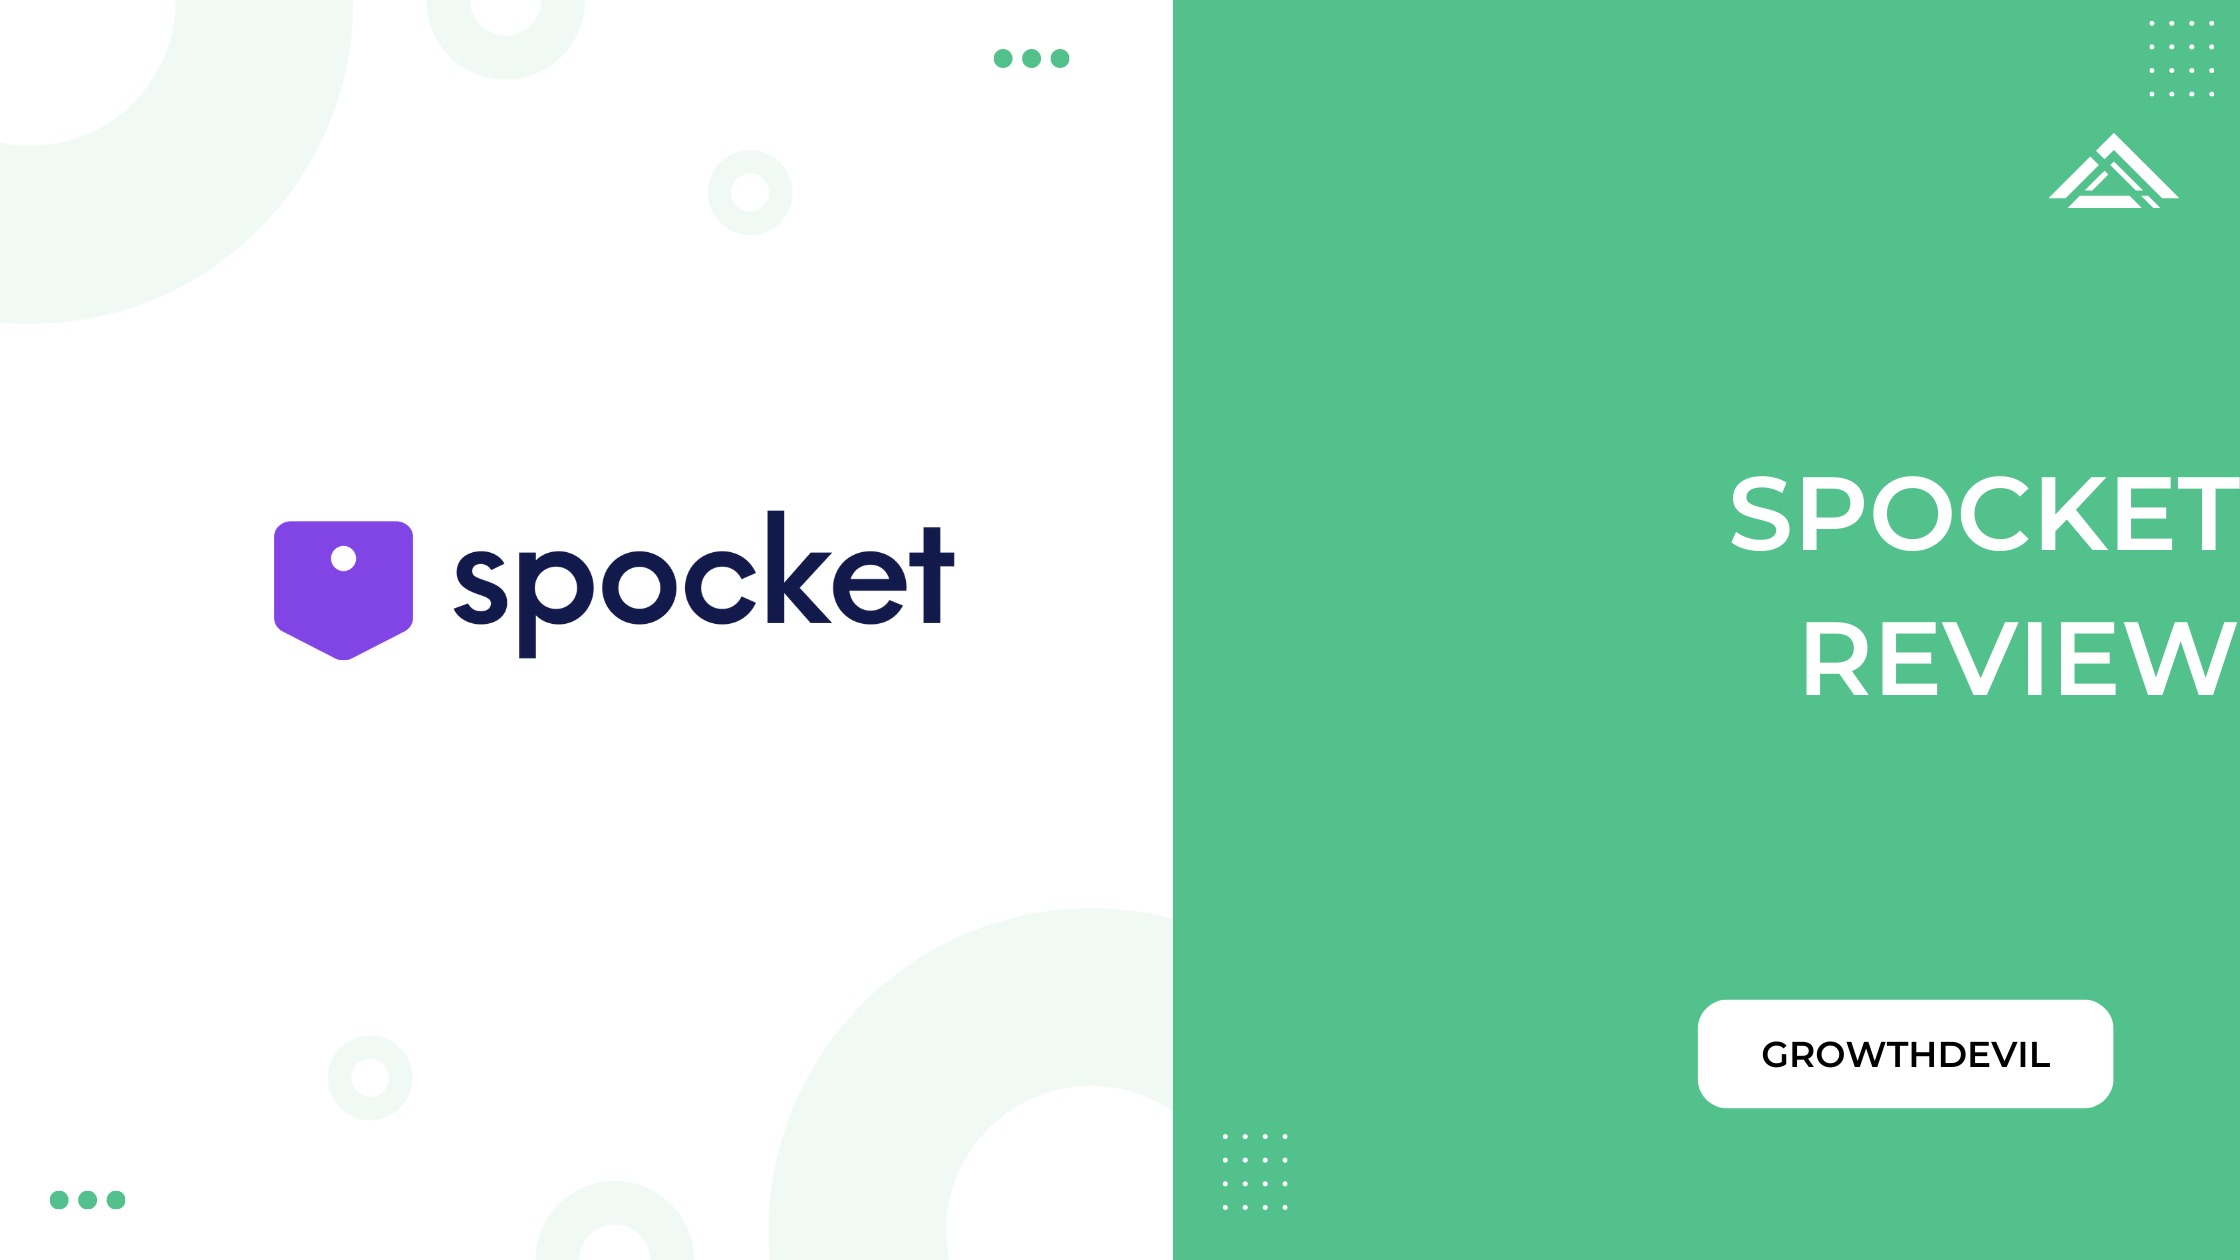 Spocket Review - GrowthDevil